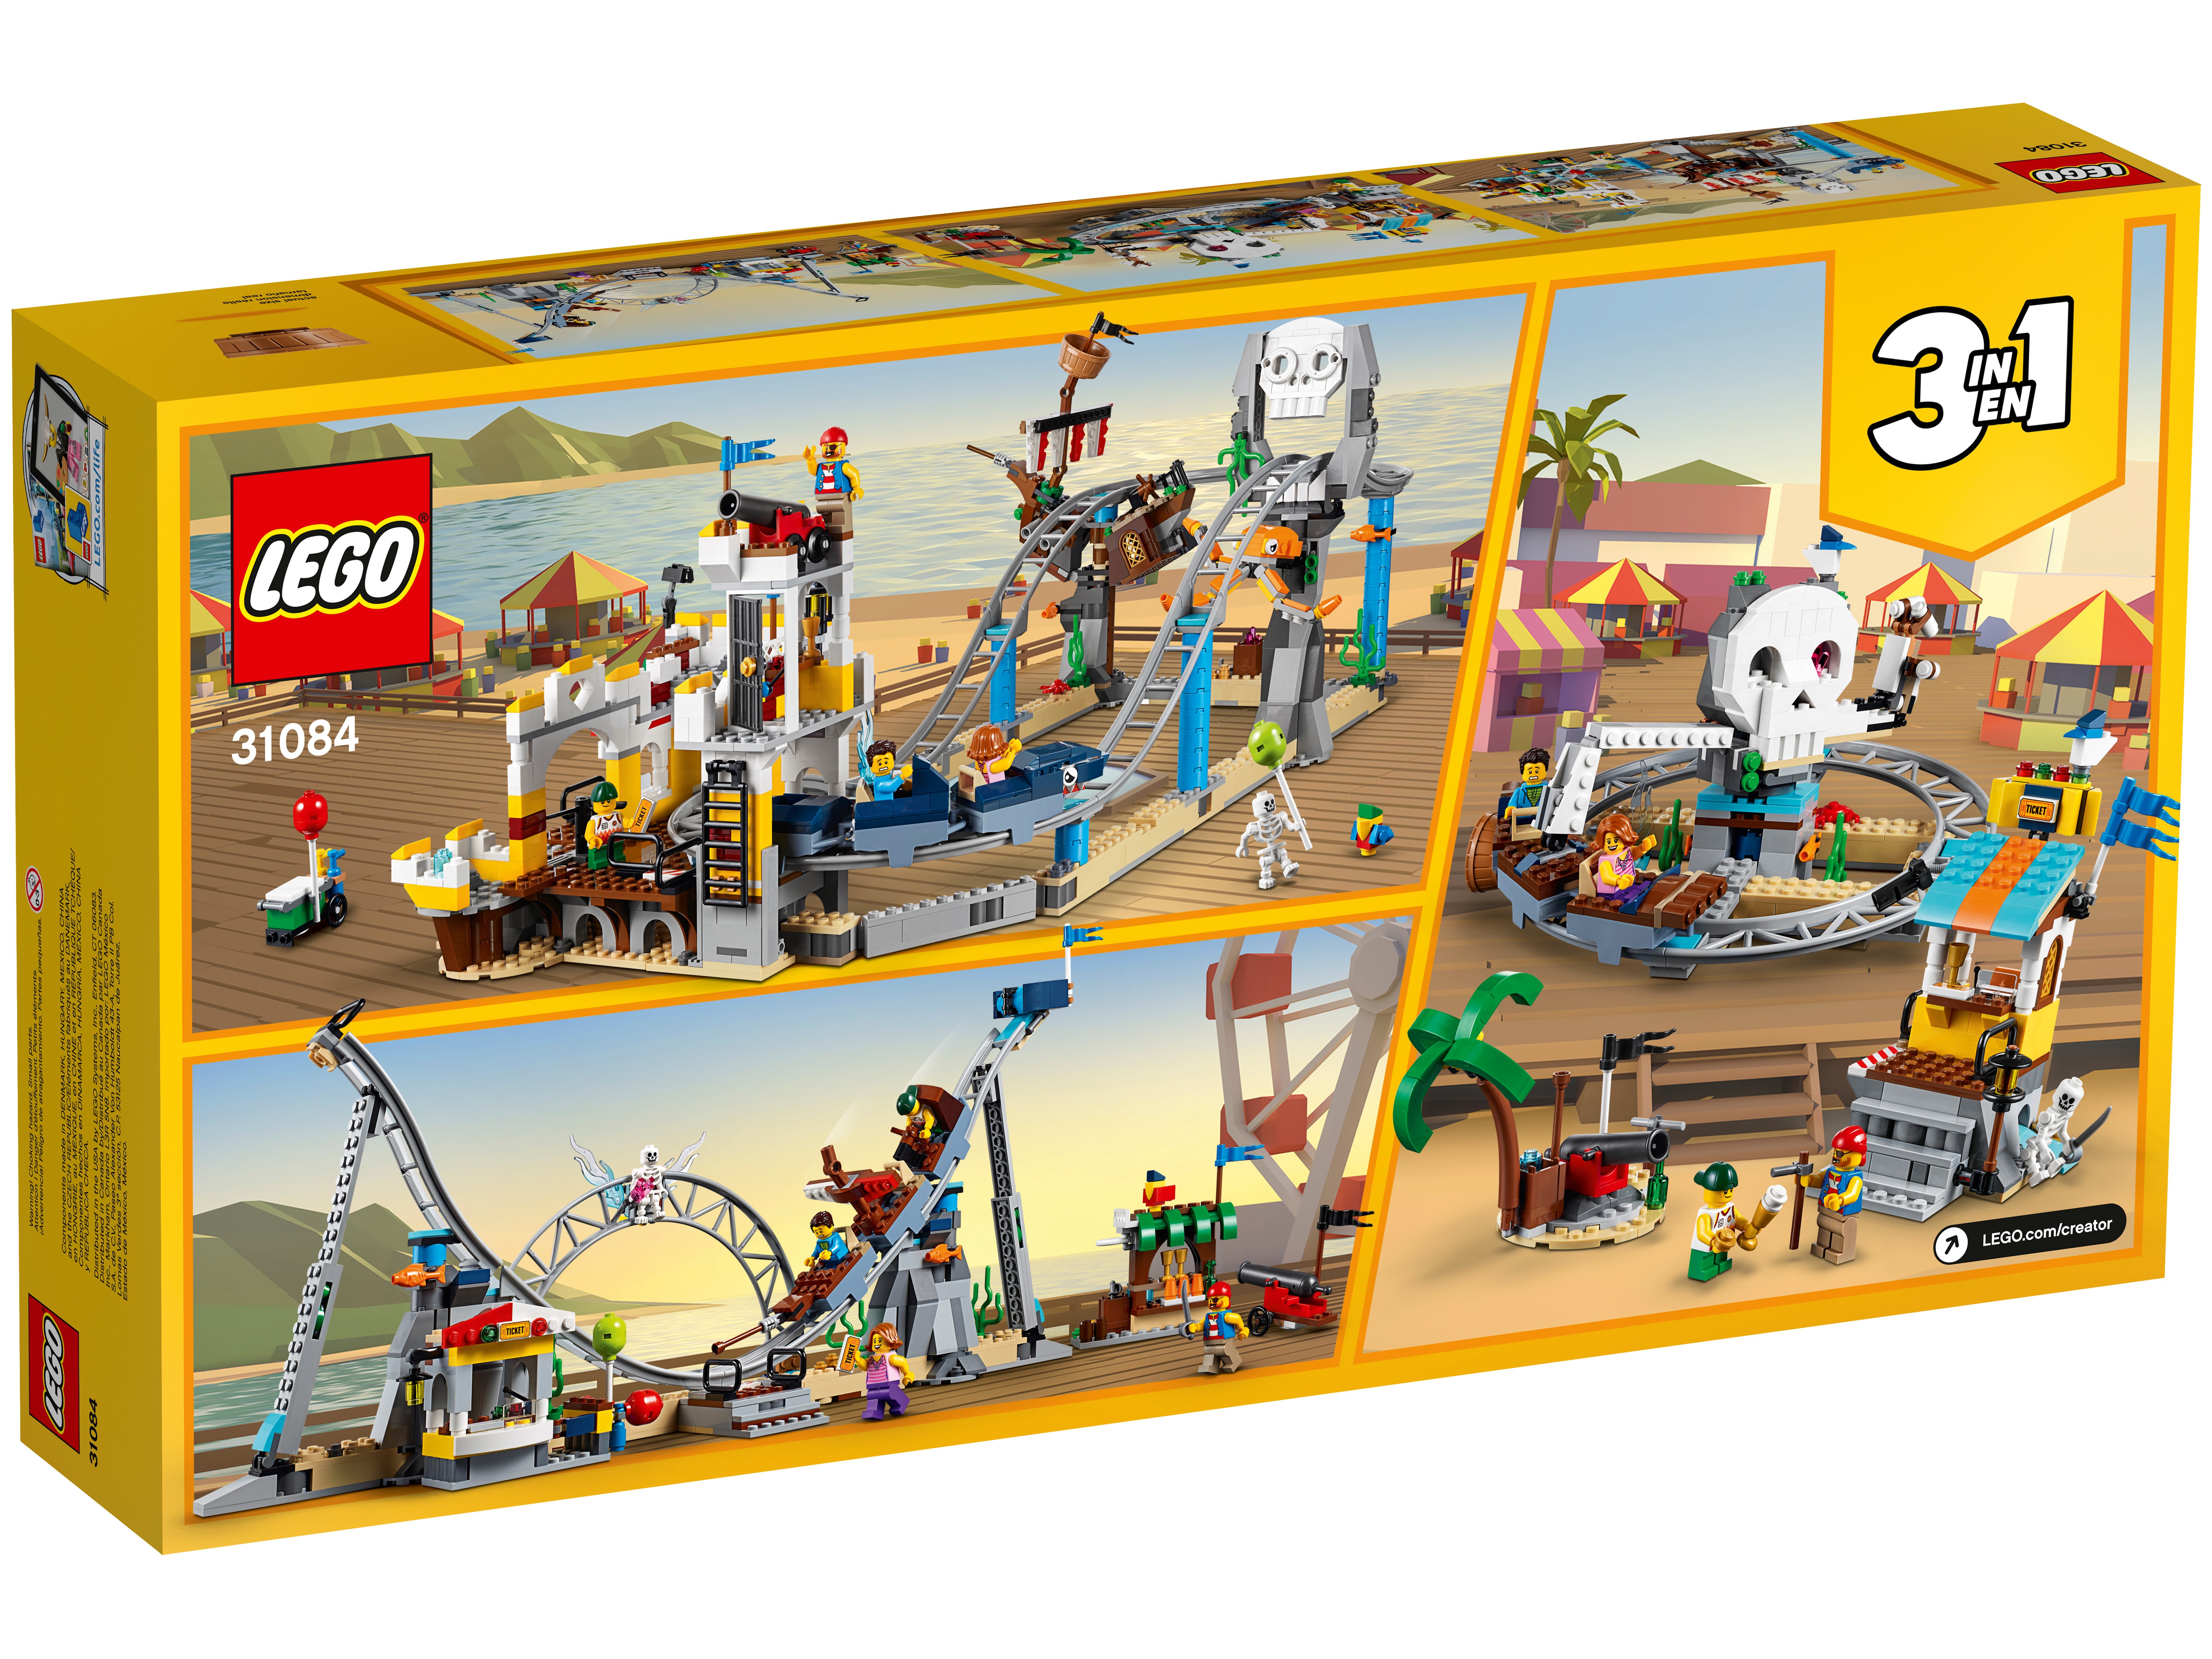 LEGO CREATOR 31084 pirati sulle montagne russe 3in1 Pirate Roller Coaster 